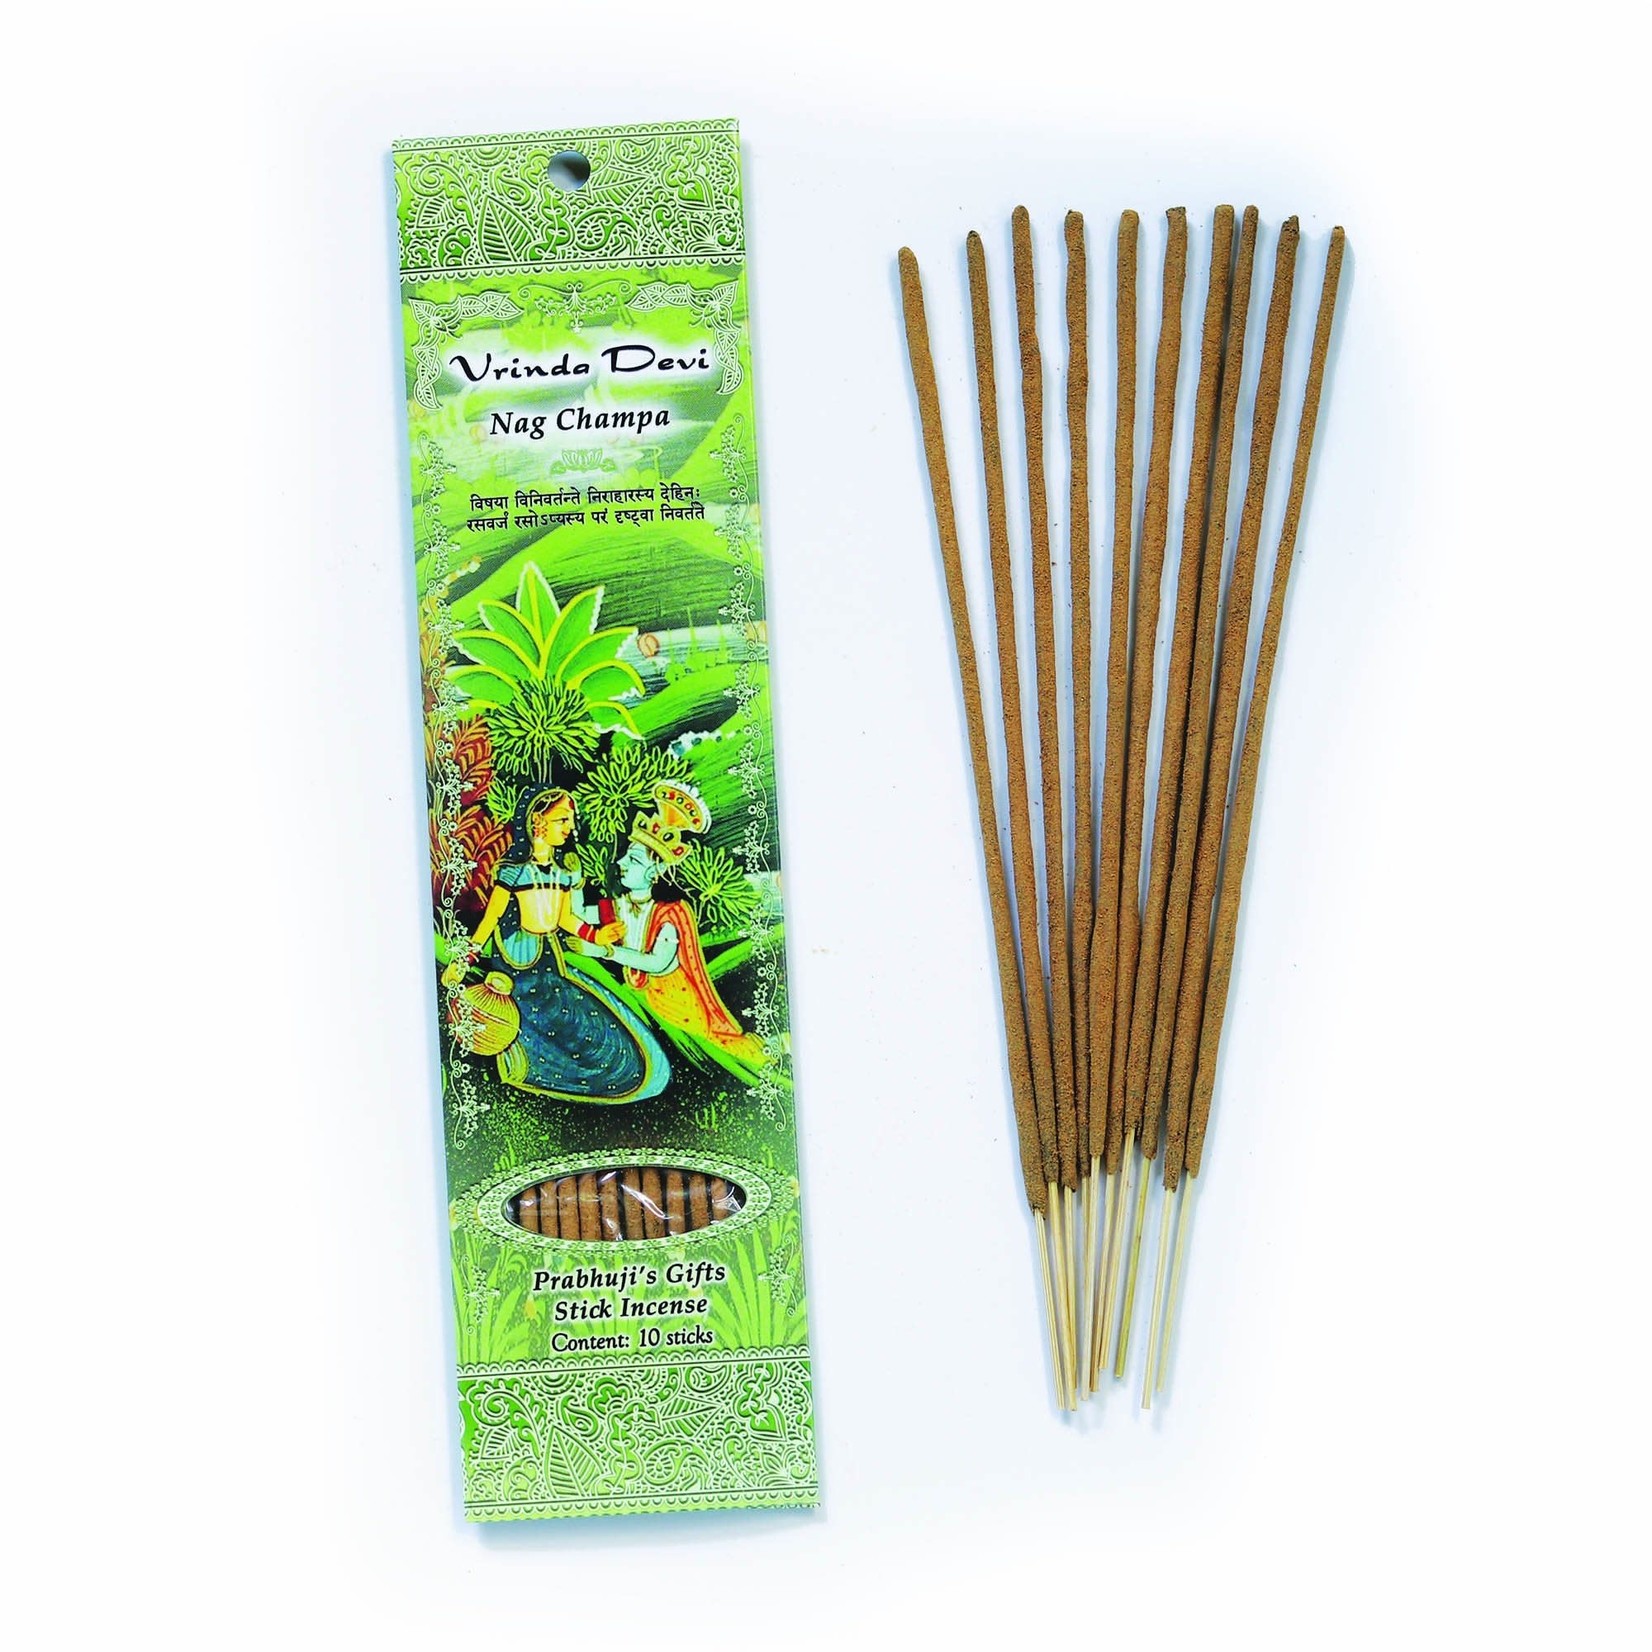 Prabhujis Gifts Vrinda Devi - Nag Champa Incense Stick